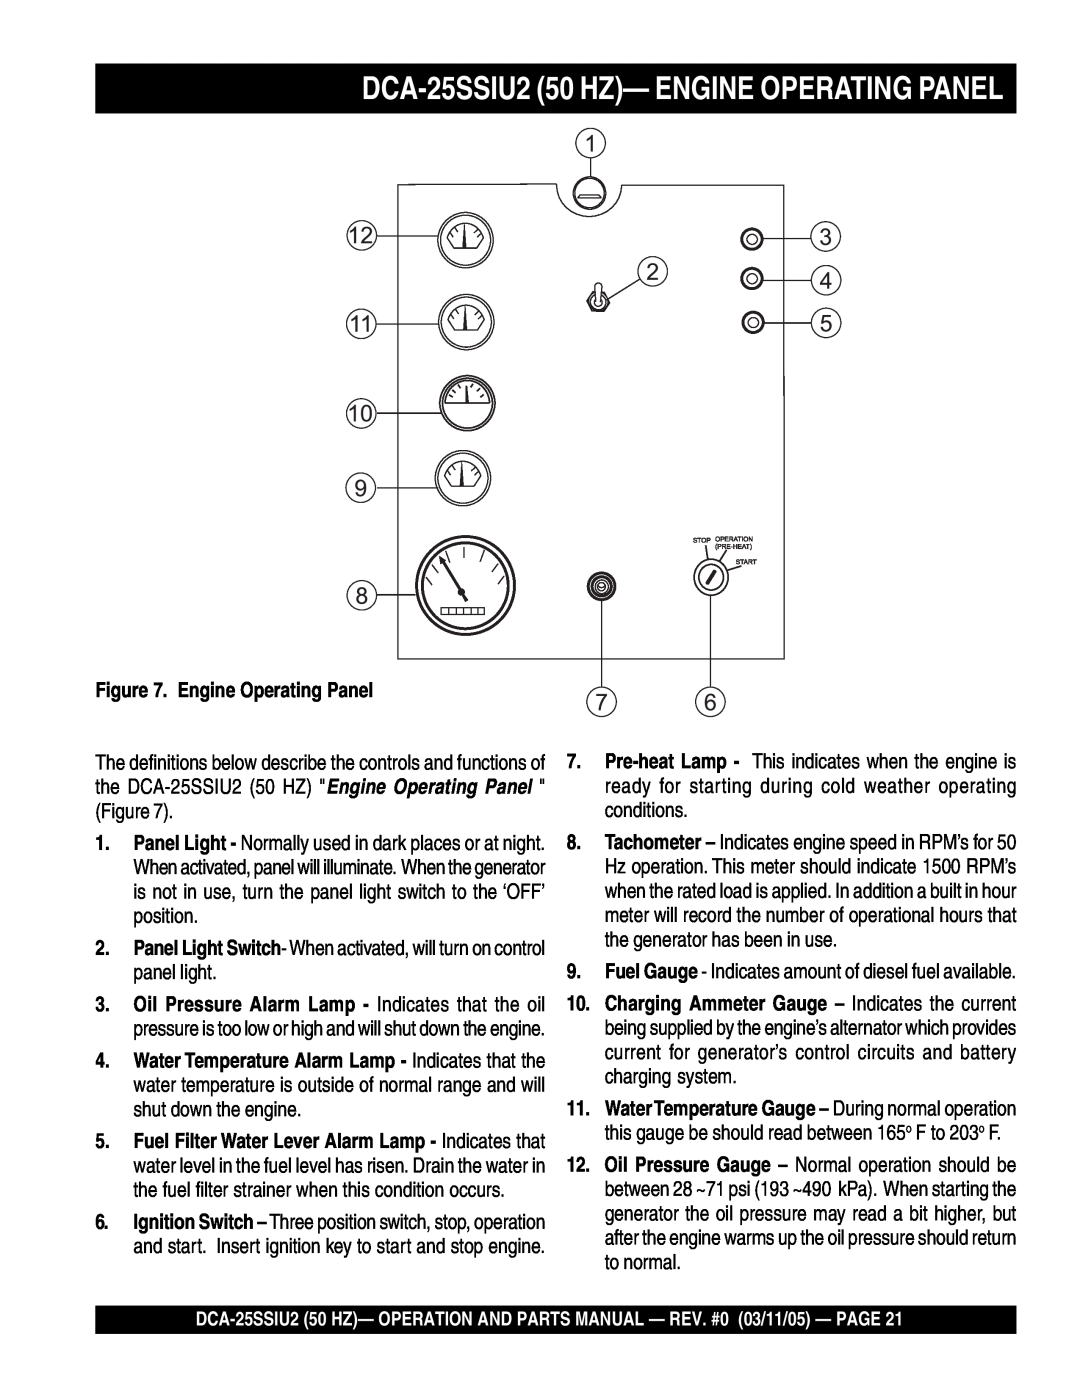 Multiquip operation manual DCA-25SSIU2 50 HZ- ENGINE OPERATING PANEL, Engine Operating Panel 